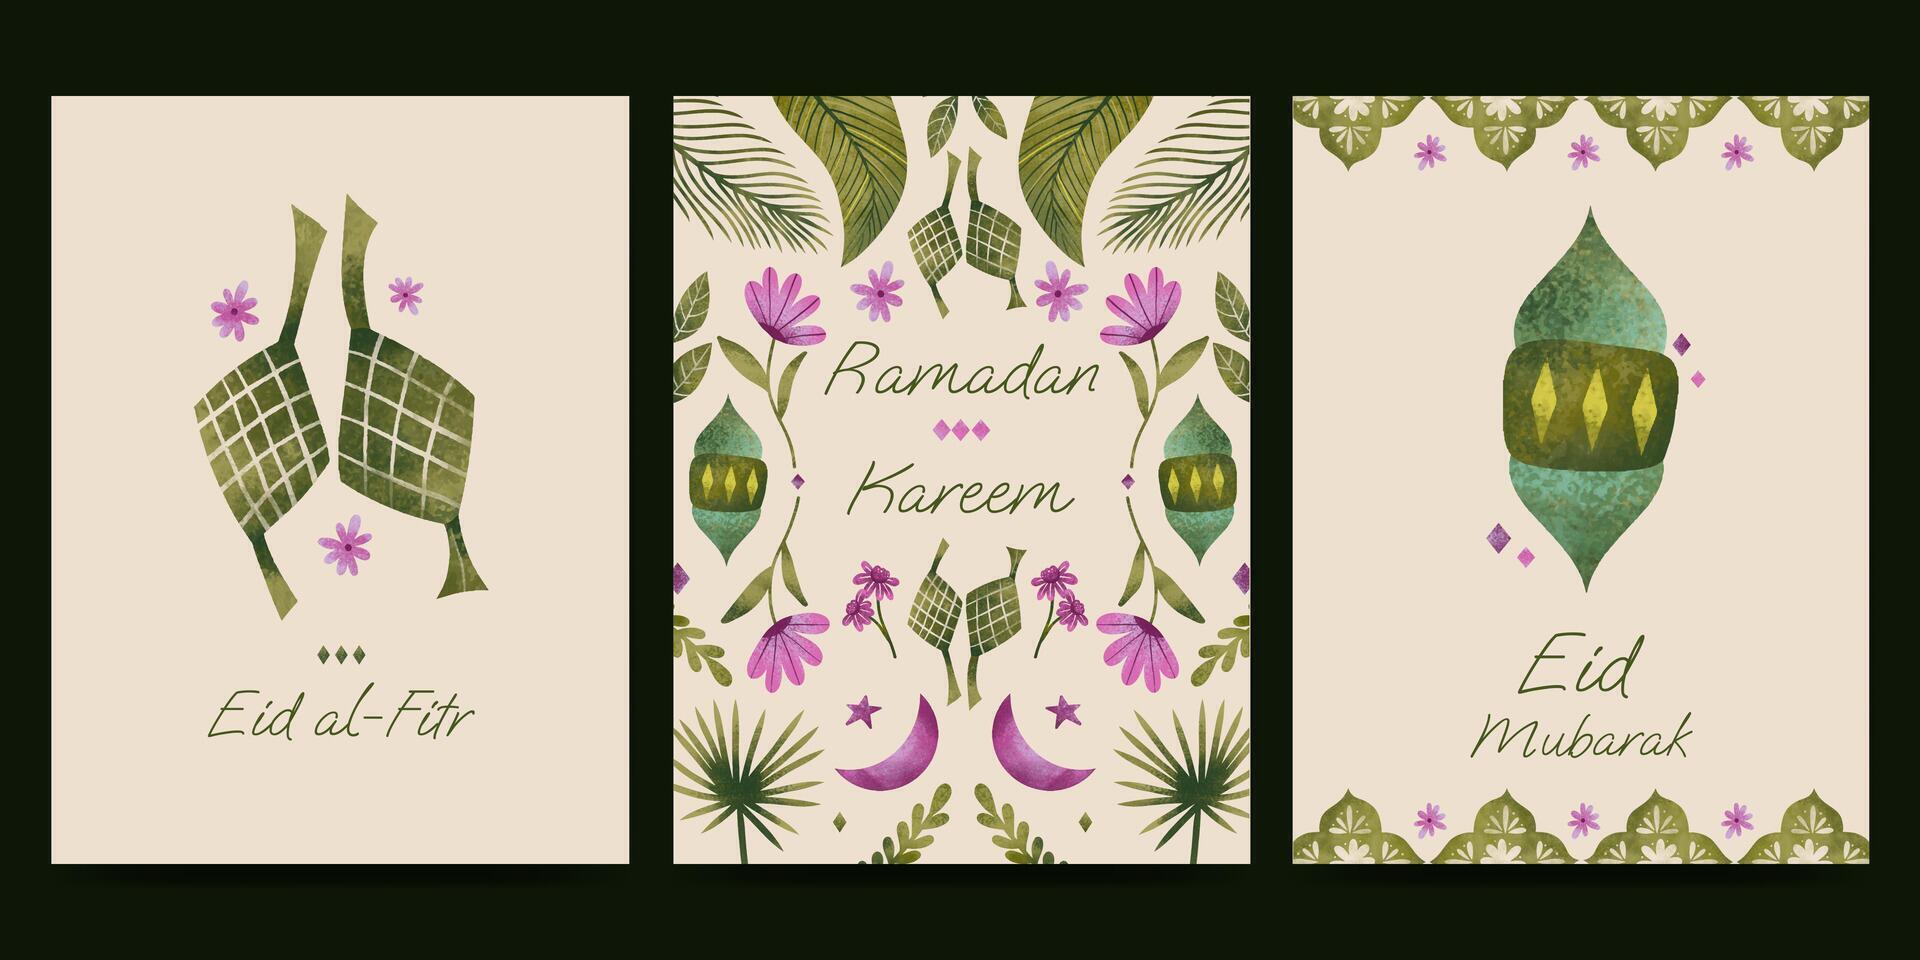 Islamic greeting card with flower and plant illustration for ramadan  eid mubarak  islamic day. vector